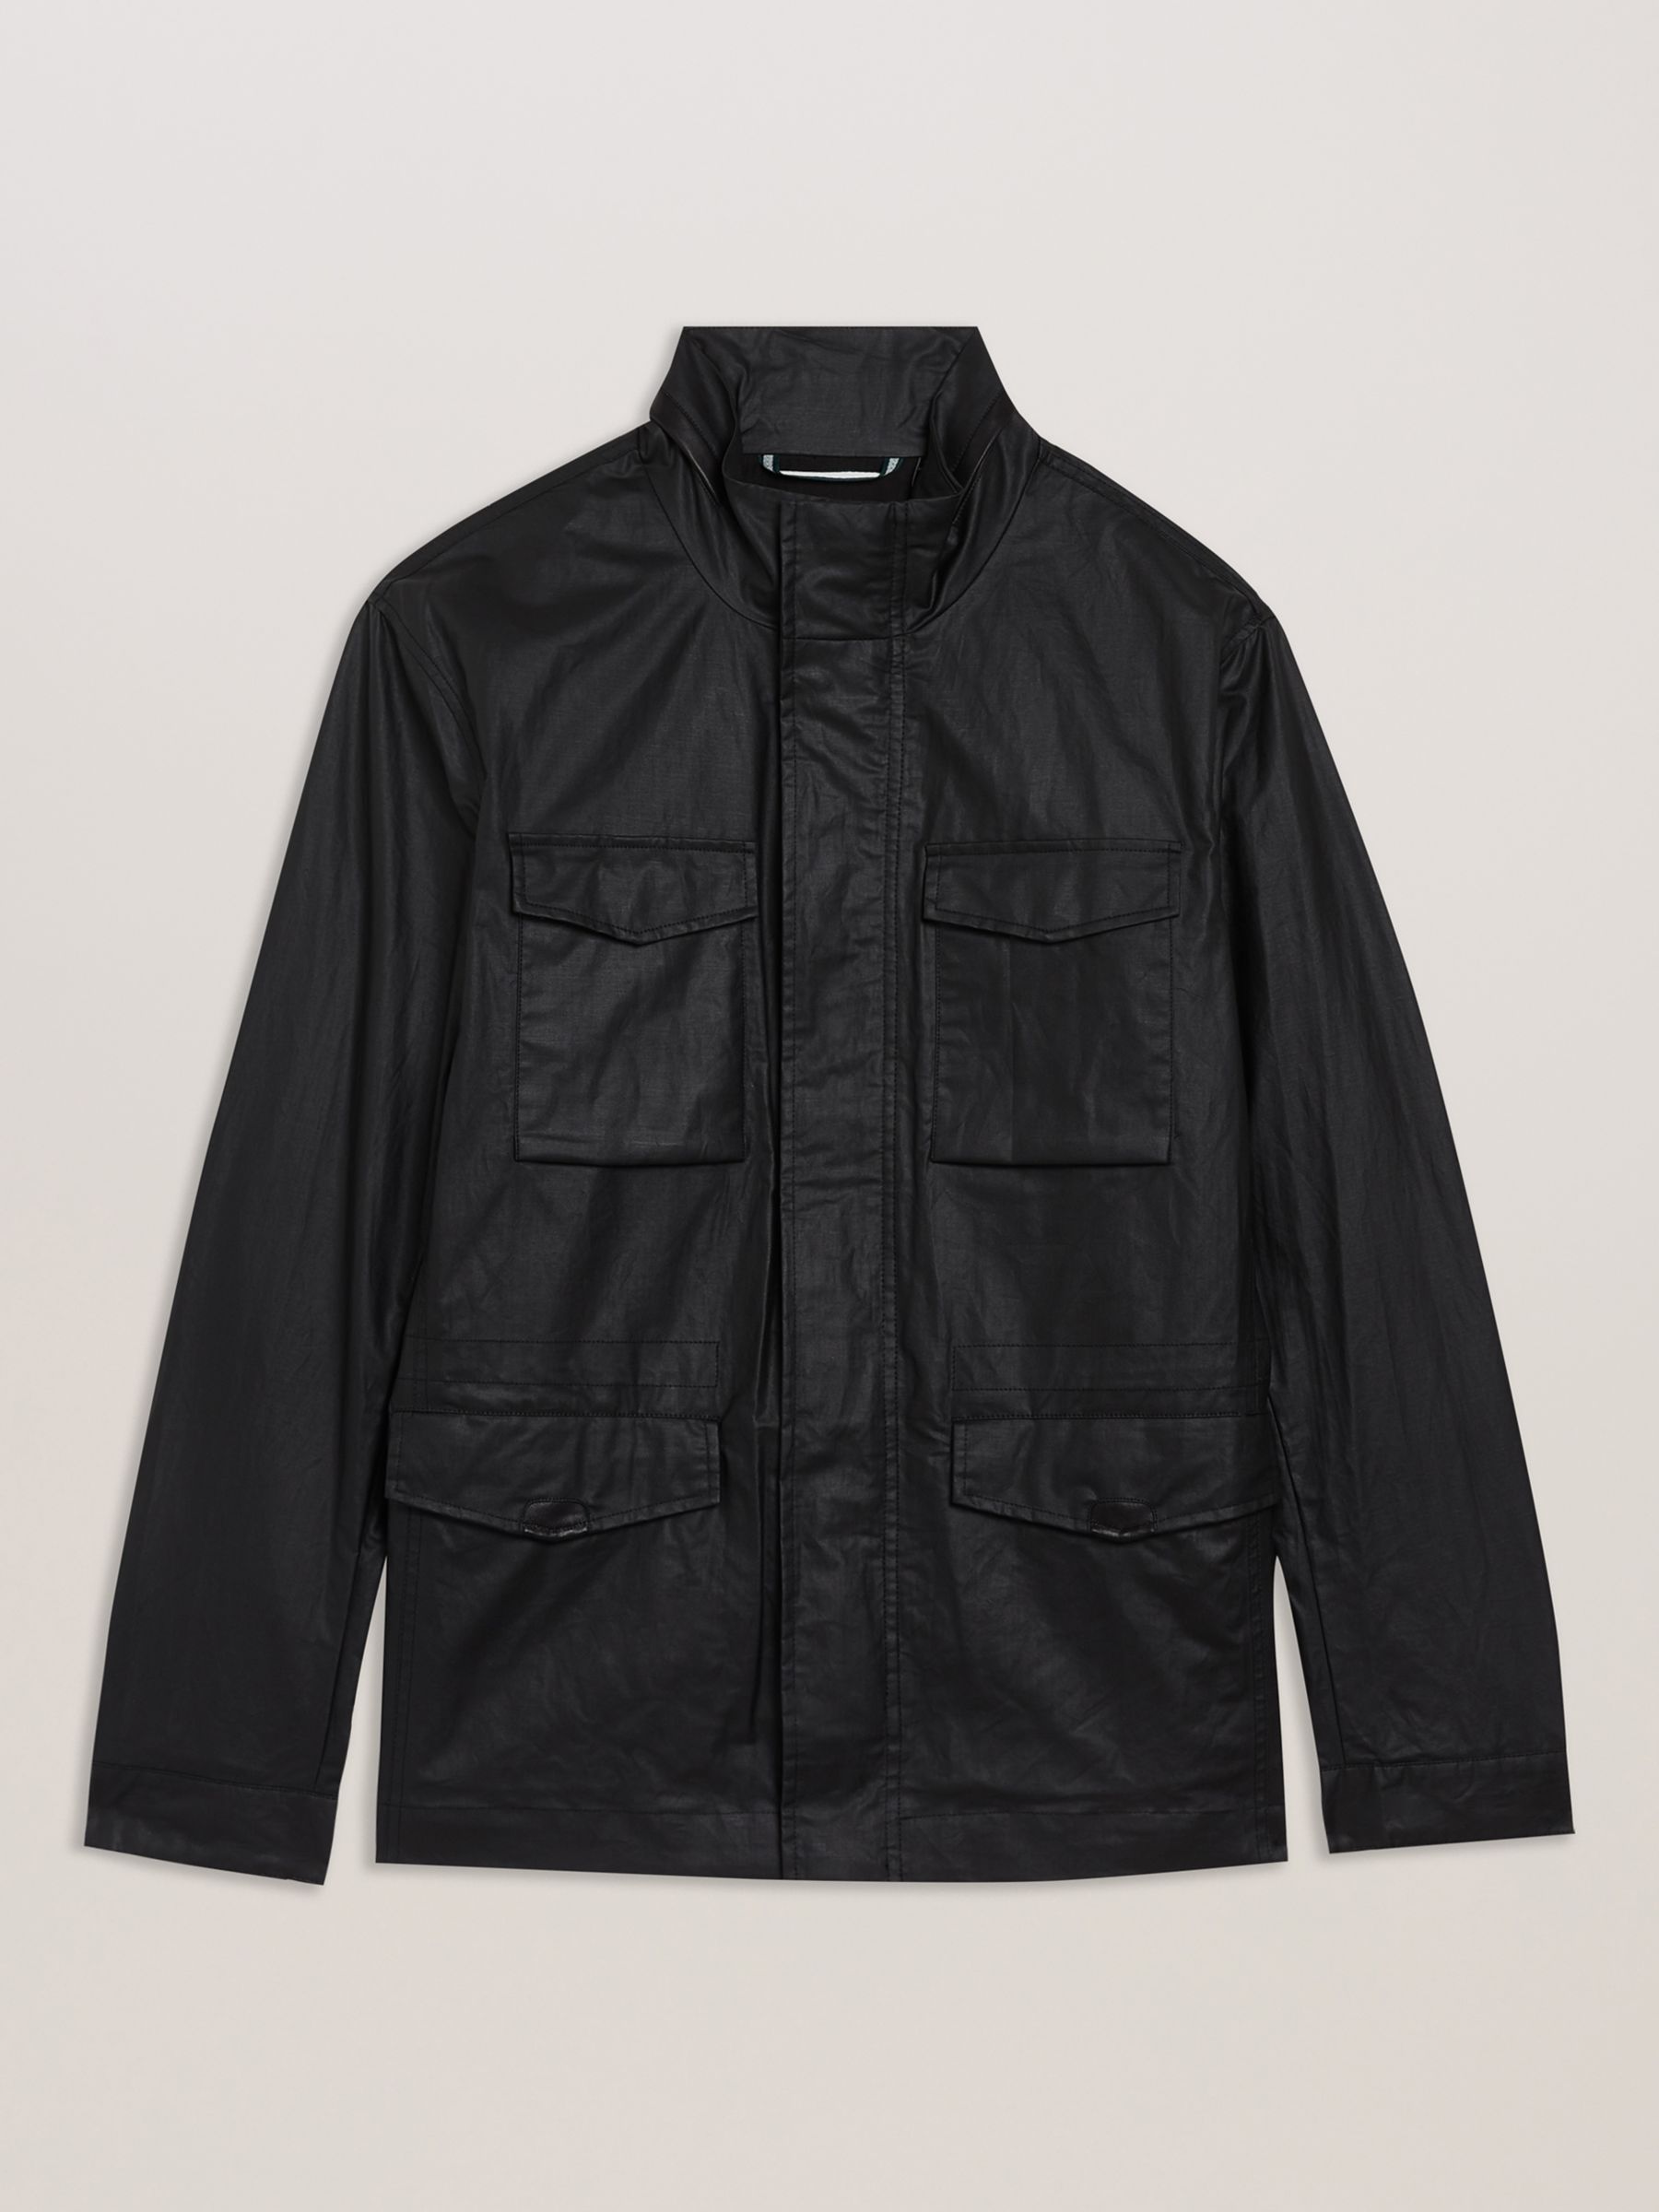 Ted Baker Manvers Technical Linen Field Jacket, Black, S